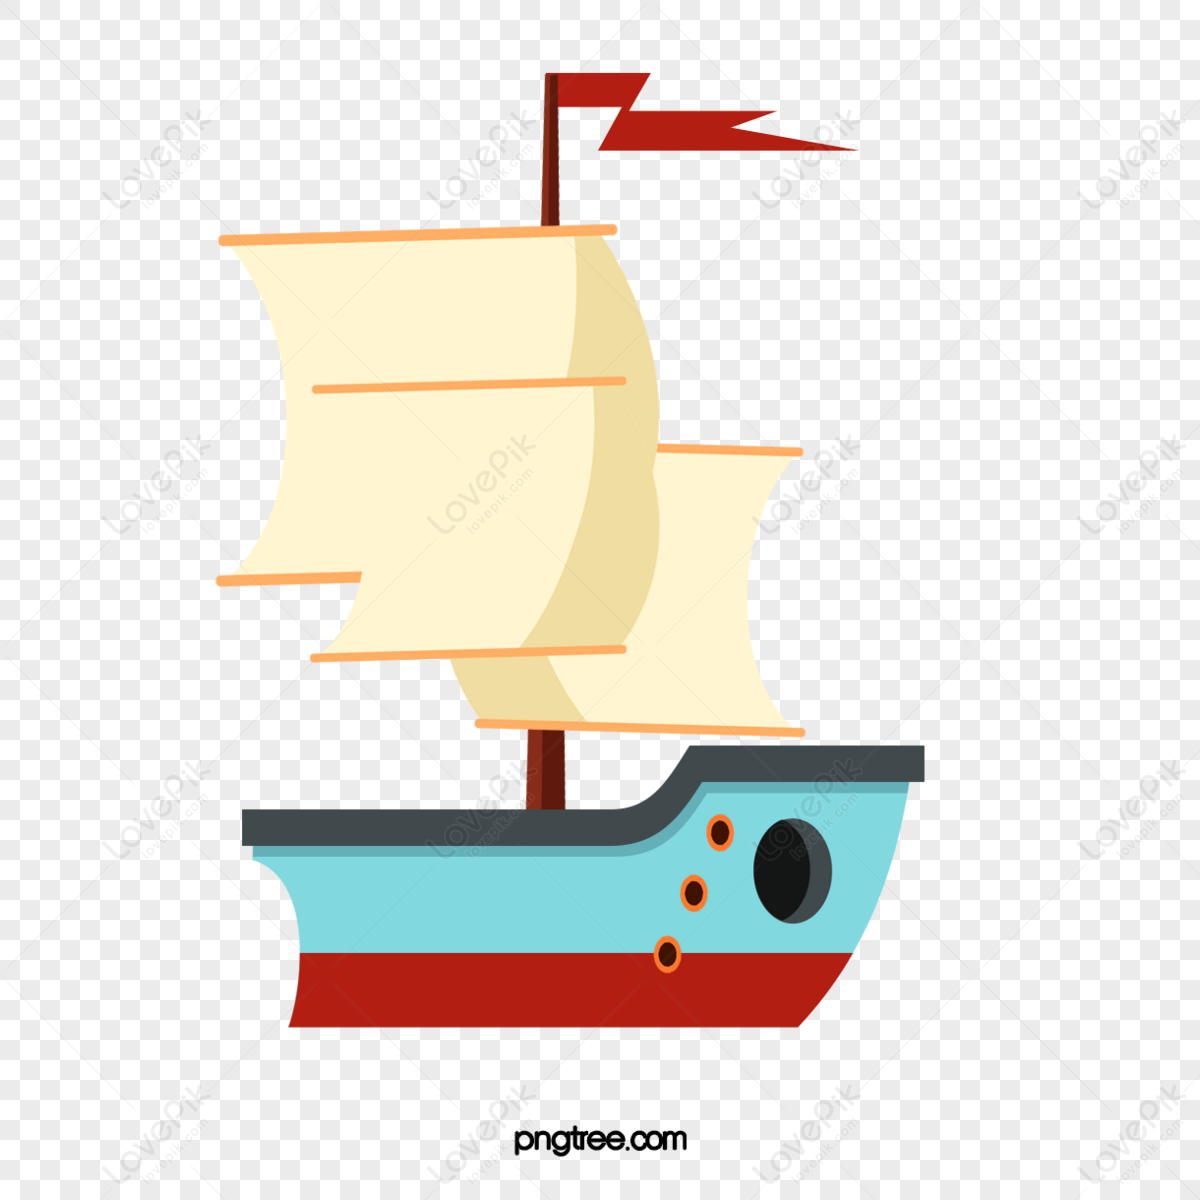 Cartoon hand drawn delicate sailboat illustration,flag,copyright png image